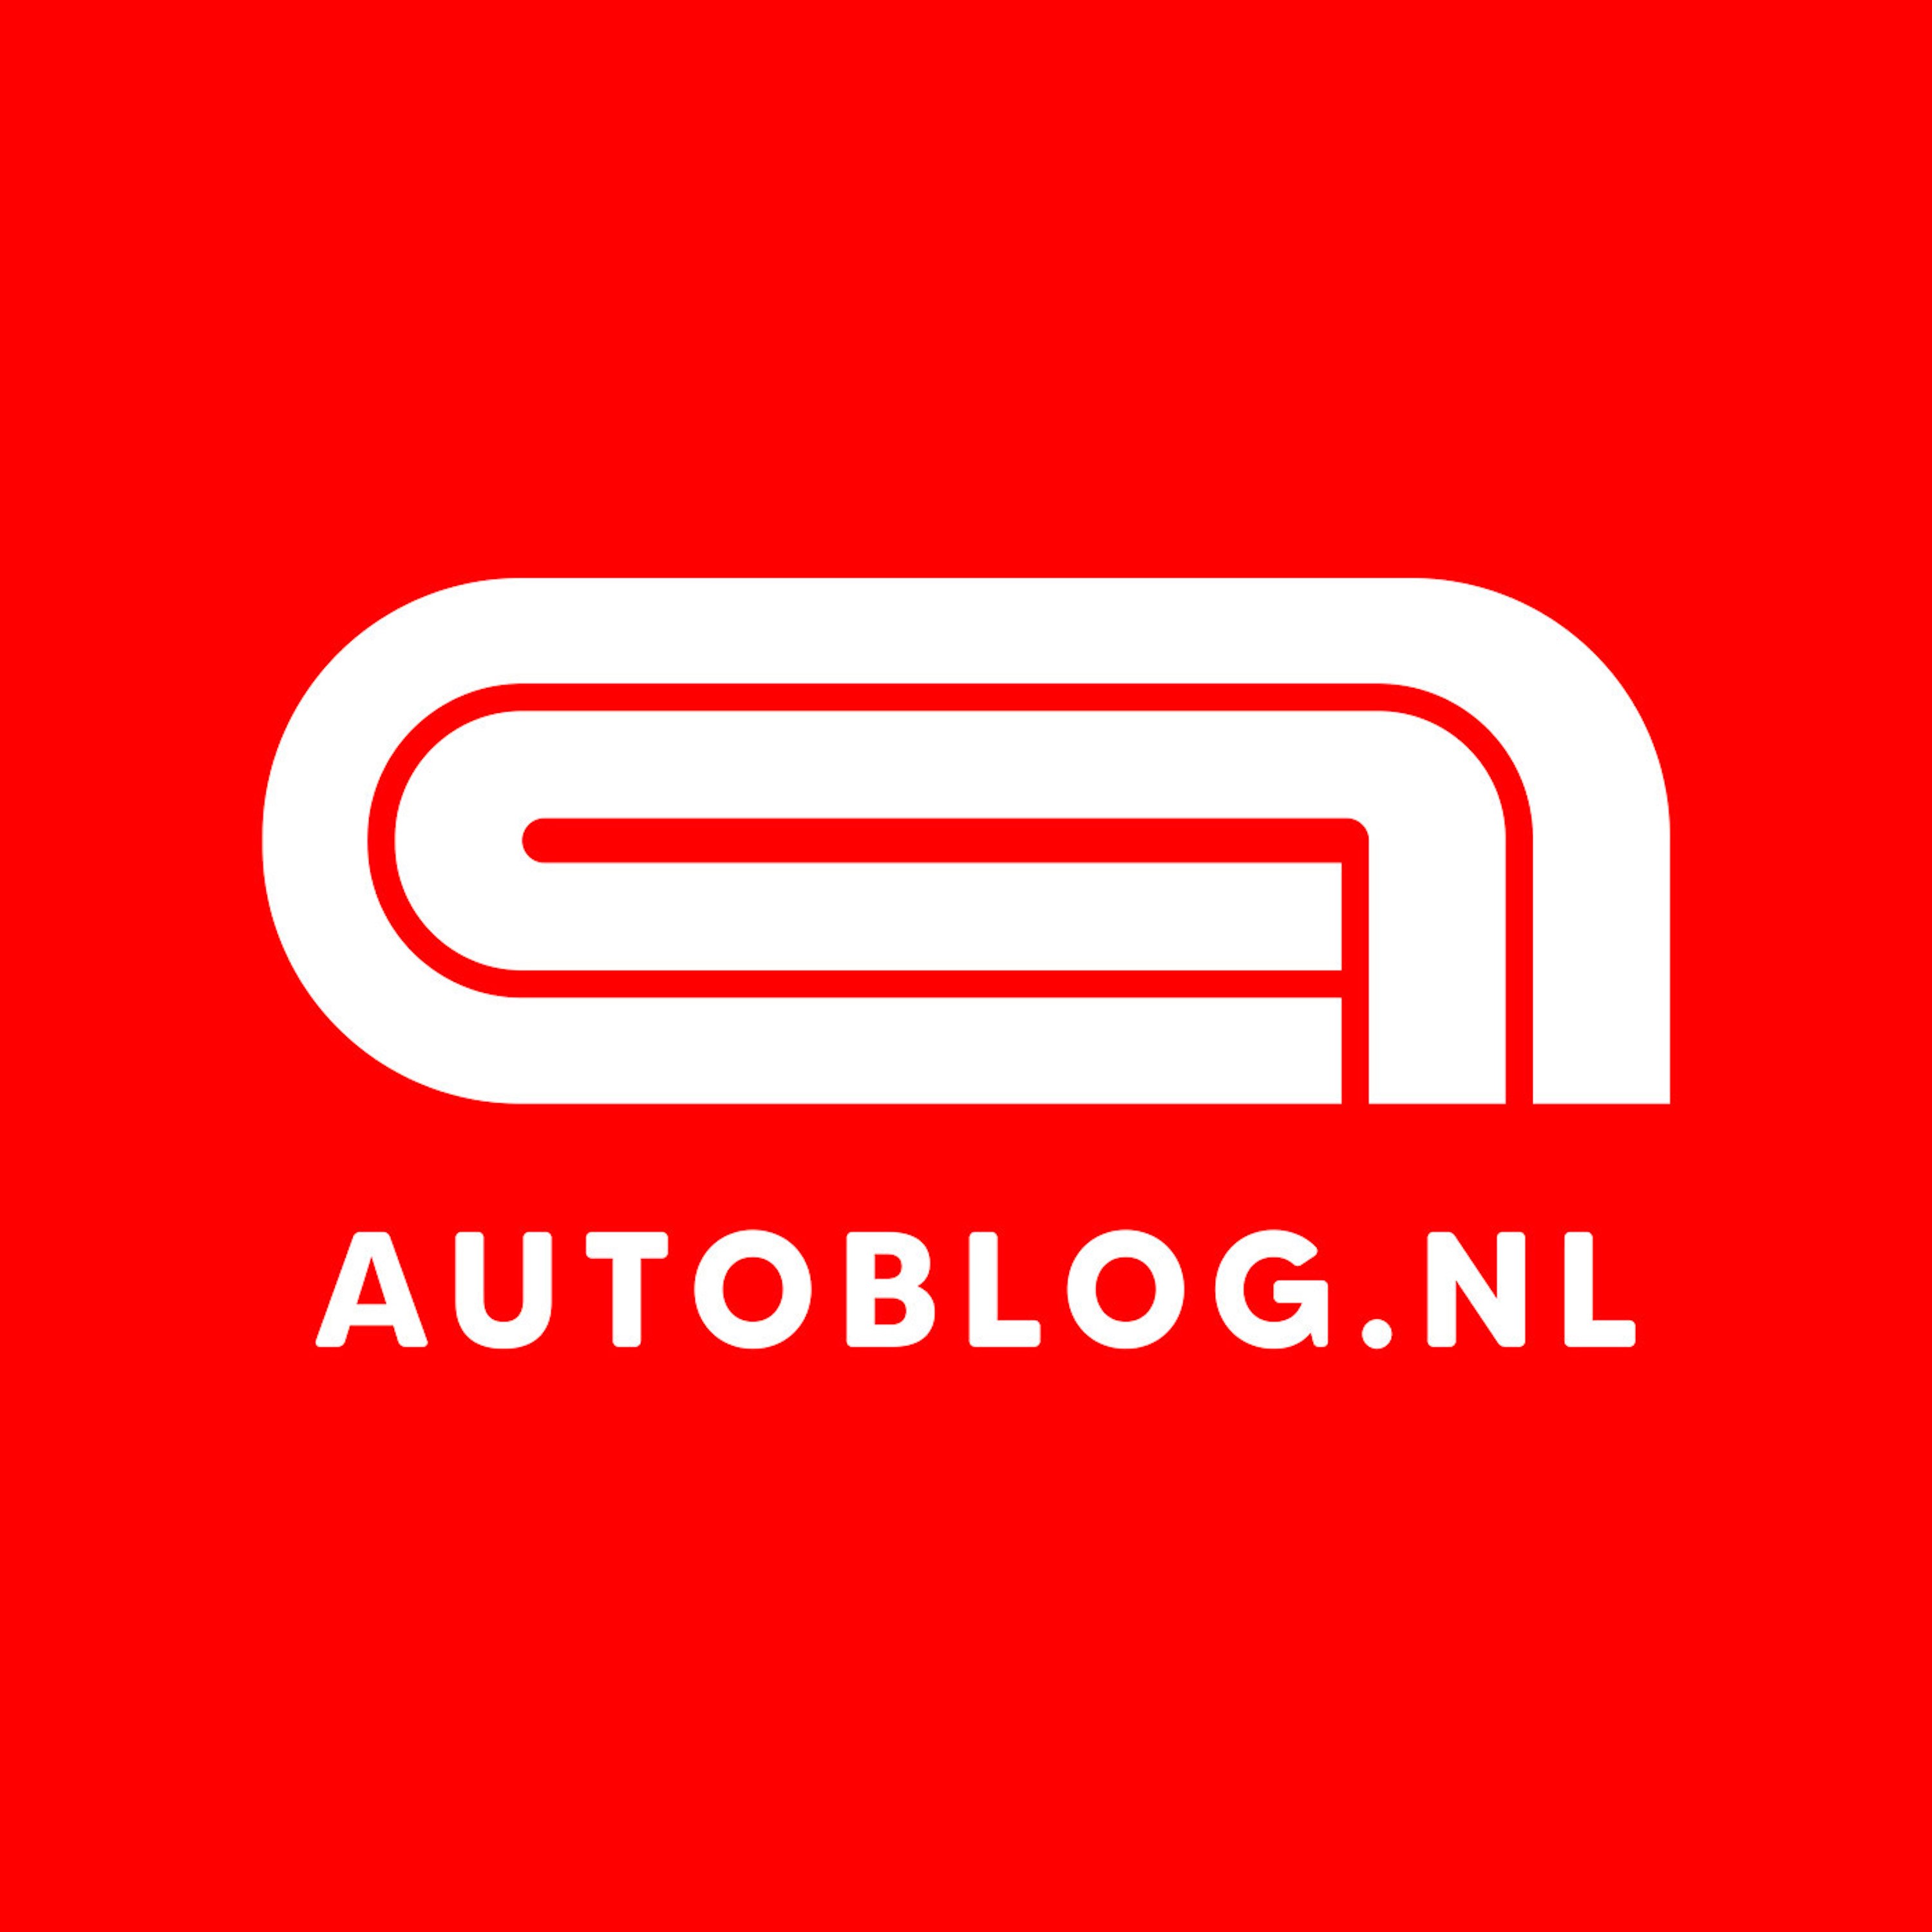 Autoblog.nl logo